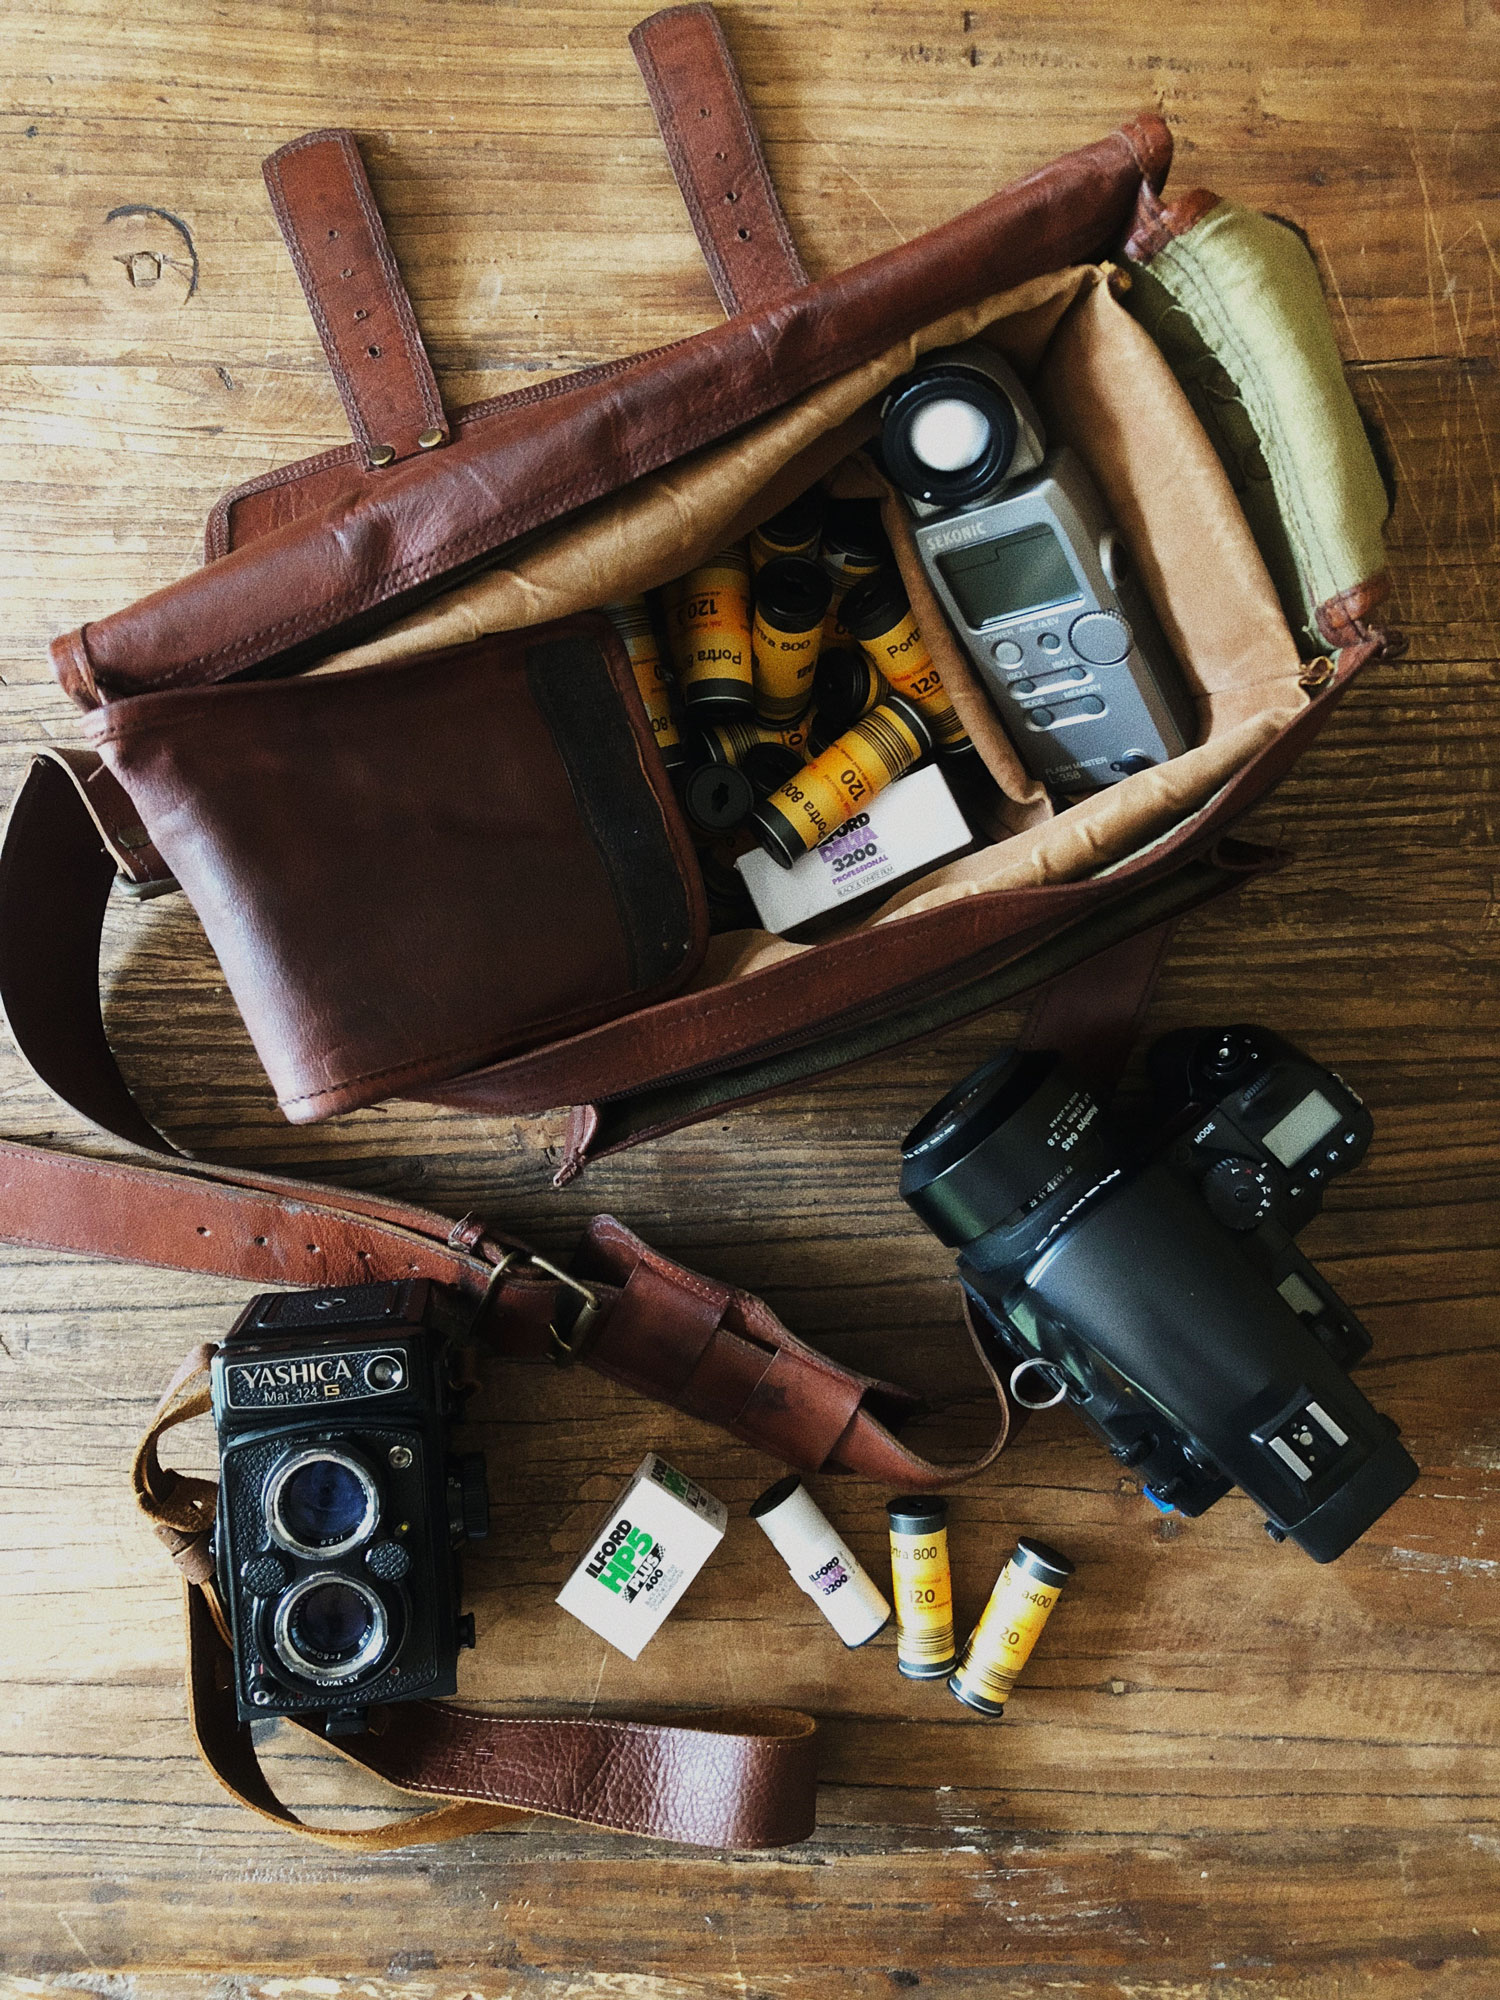 Open Camera Bag, Cameras, and Rolls of Film